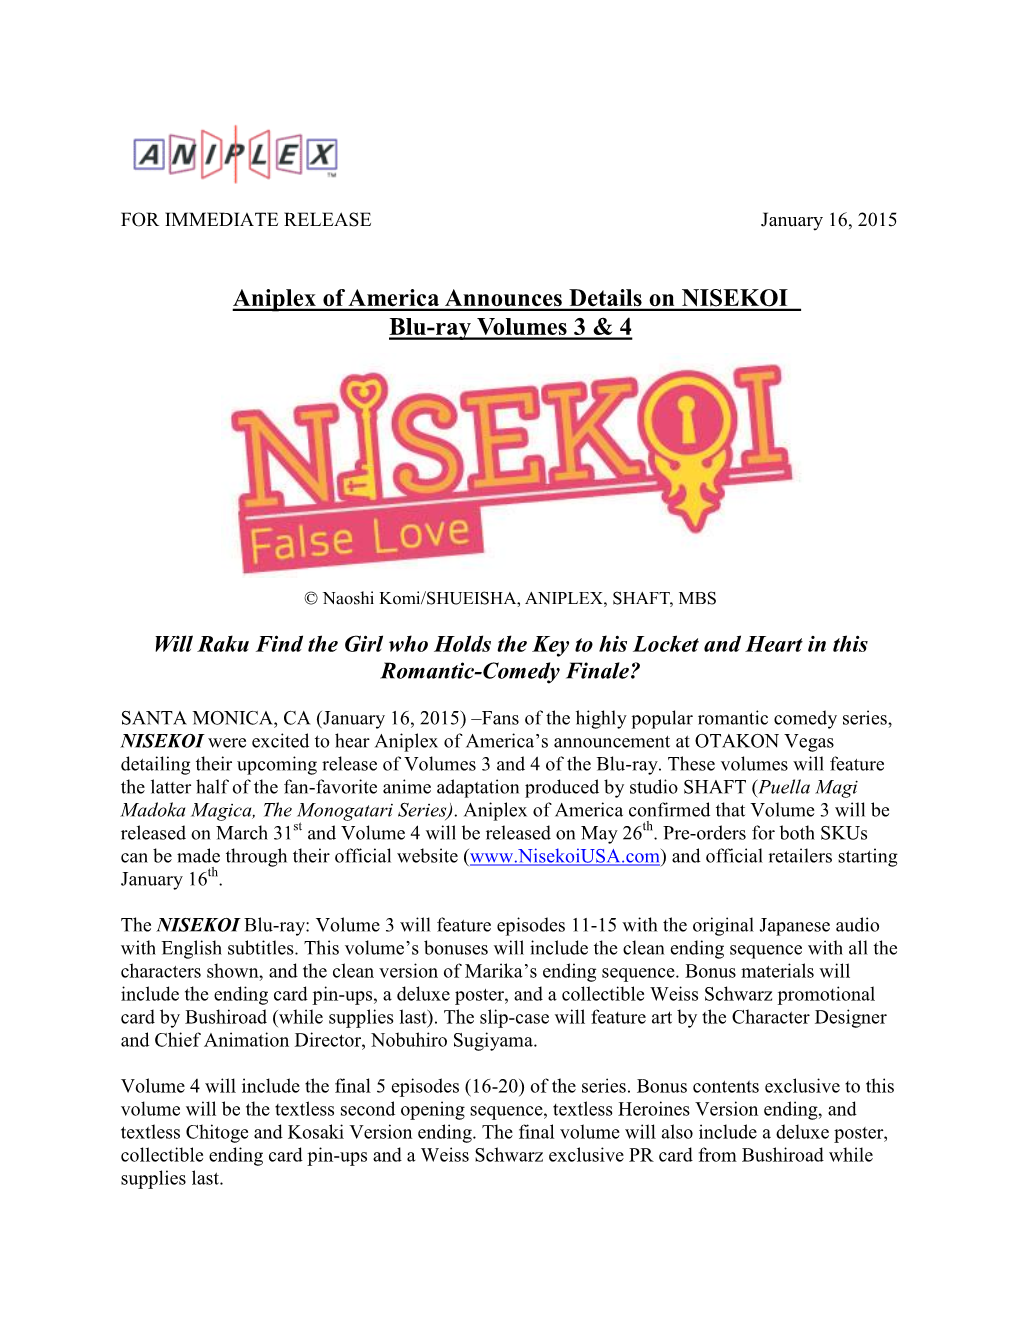 Aniplex of America Announces Details on NISEKOI Blu-Ray Volumes 3 & 4